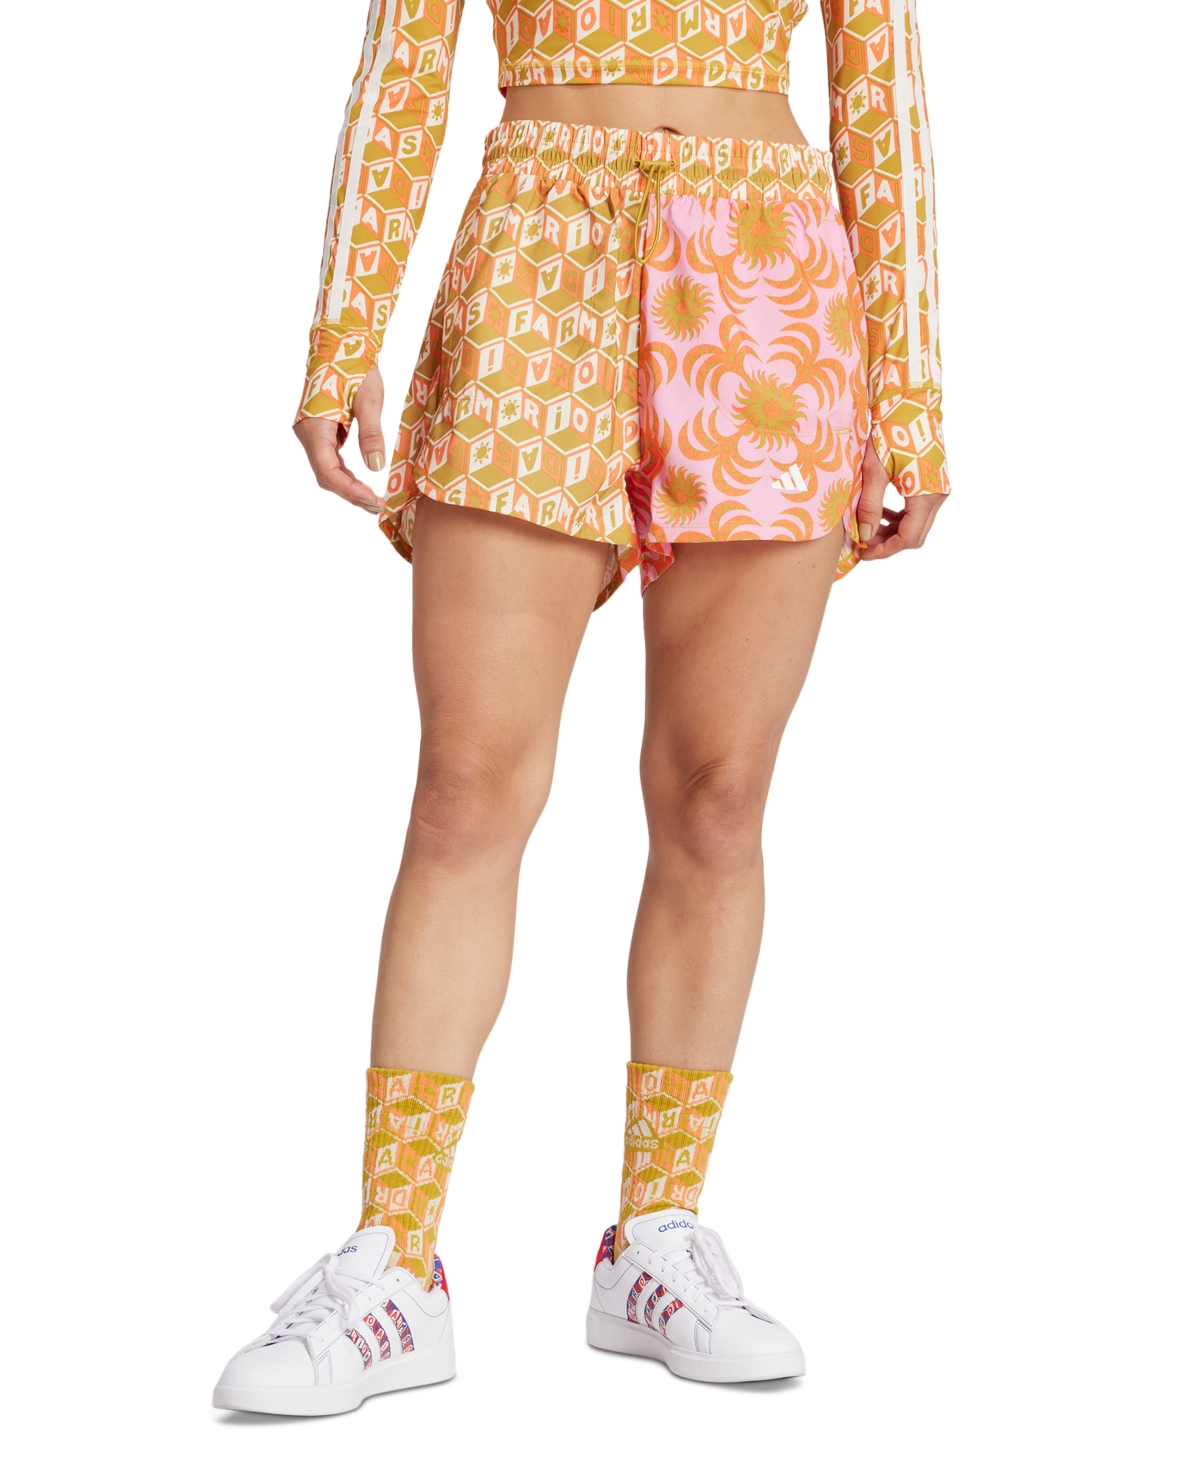 Adidas Originals Women's Farm Rio Training Printed Shorts In Semi Pink Glow,semi Solar Orange